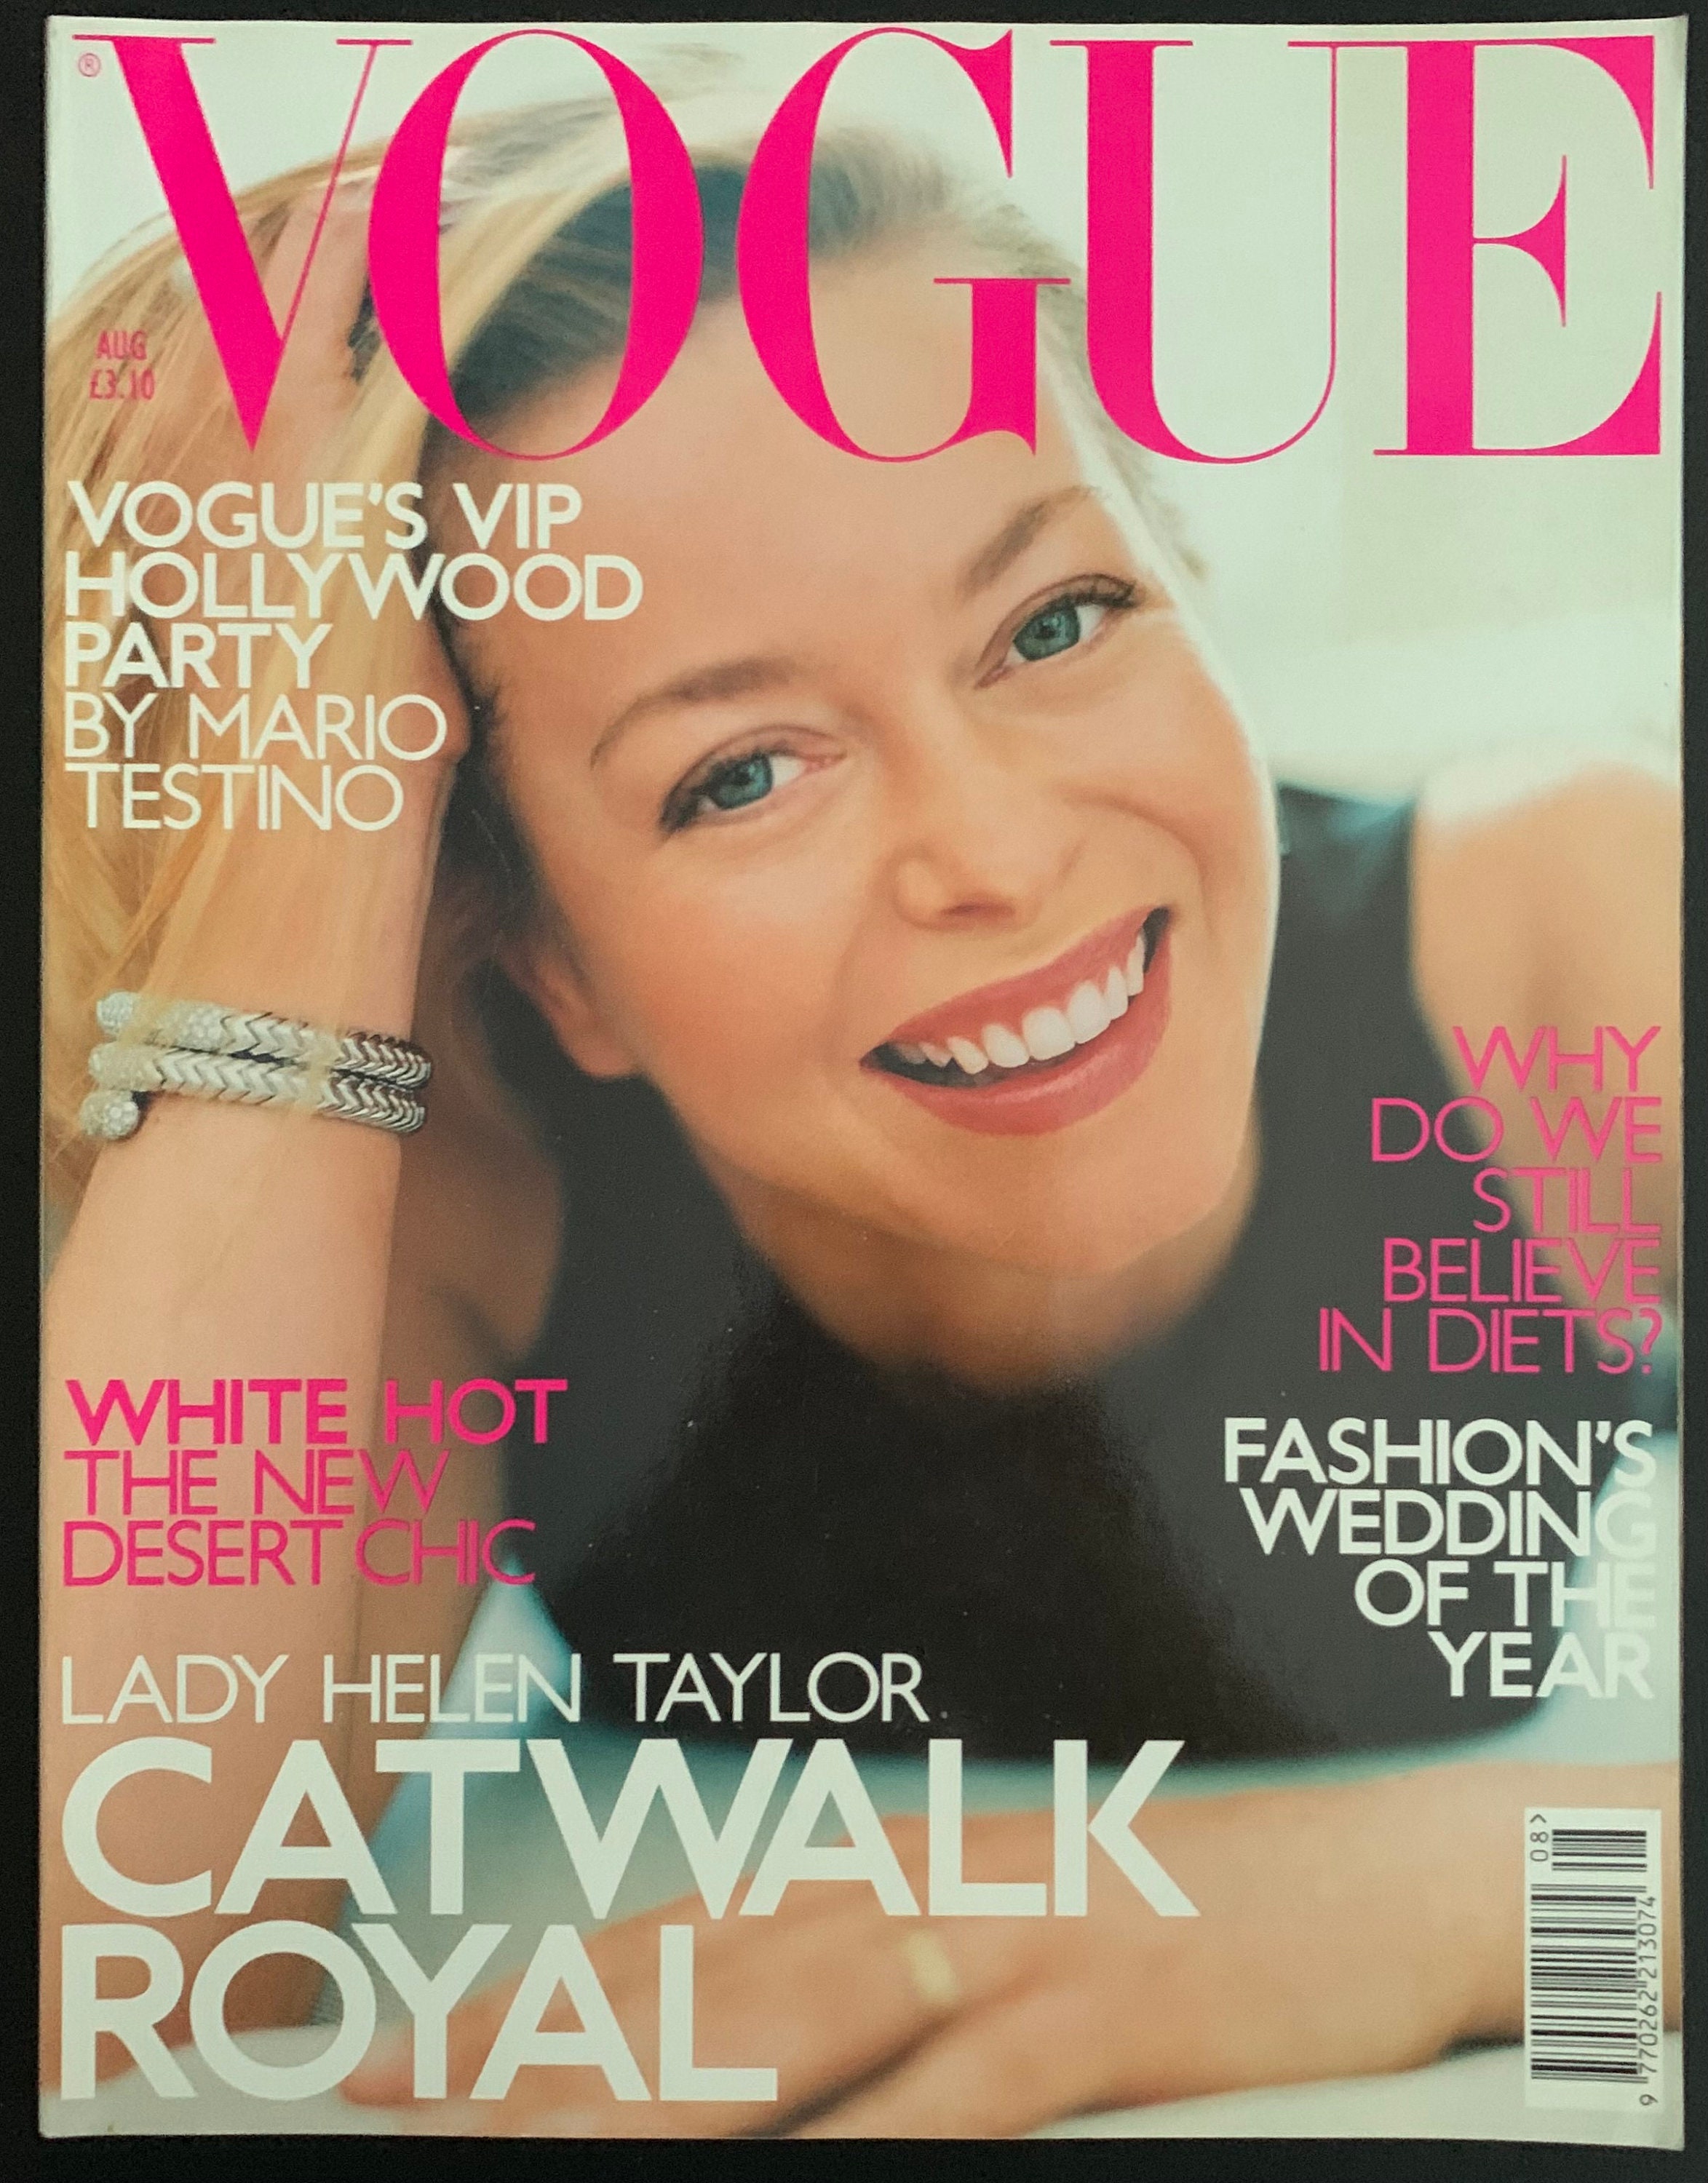 US Vogue magazine - August 2000 - Carmen Kass cover